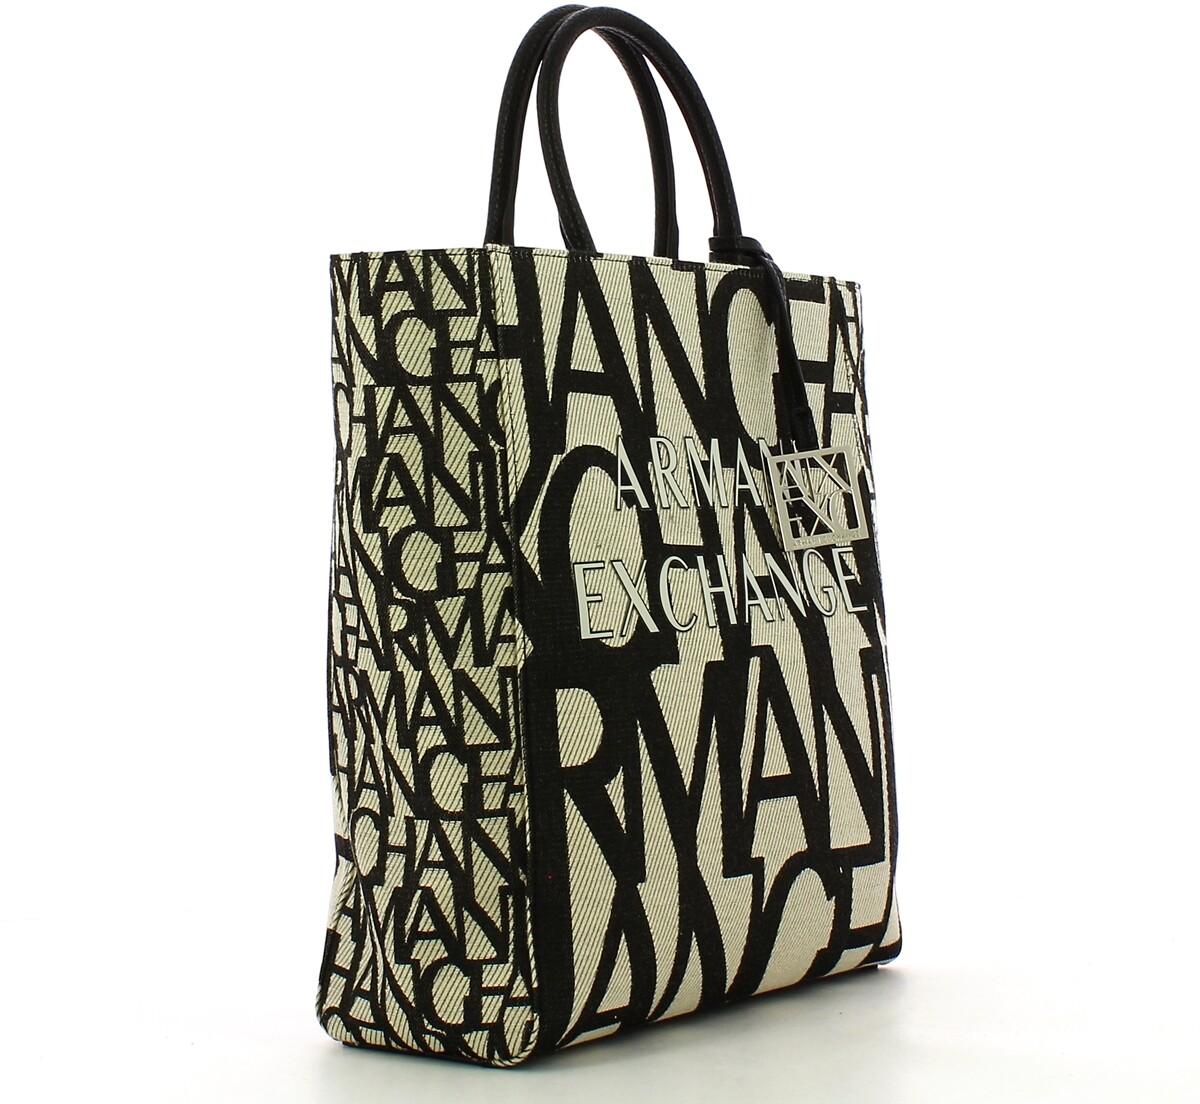 Armani Exchange Women Bag - Black